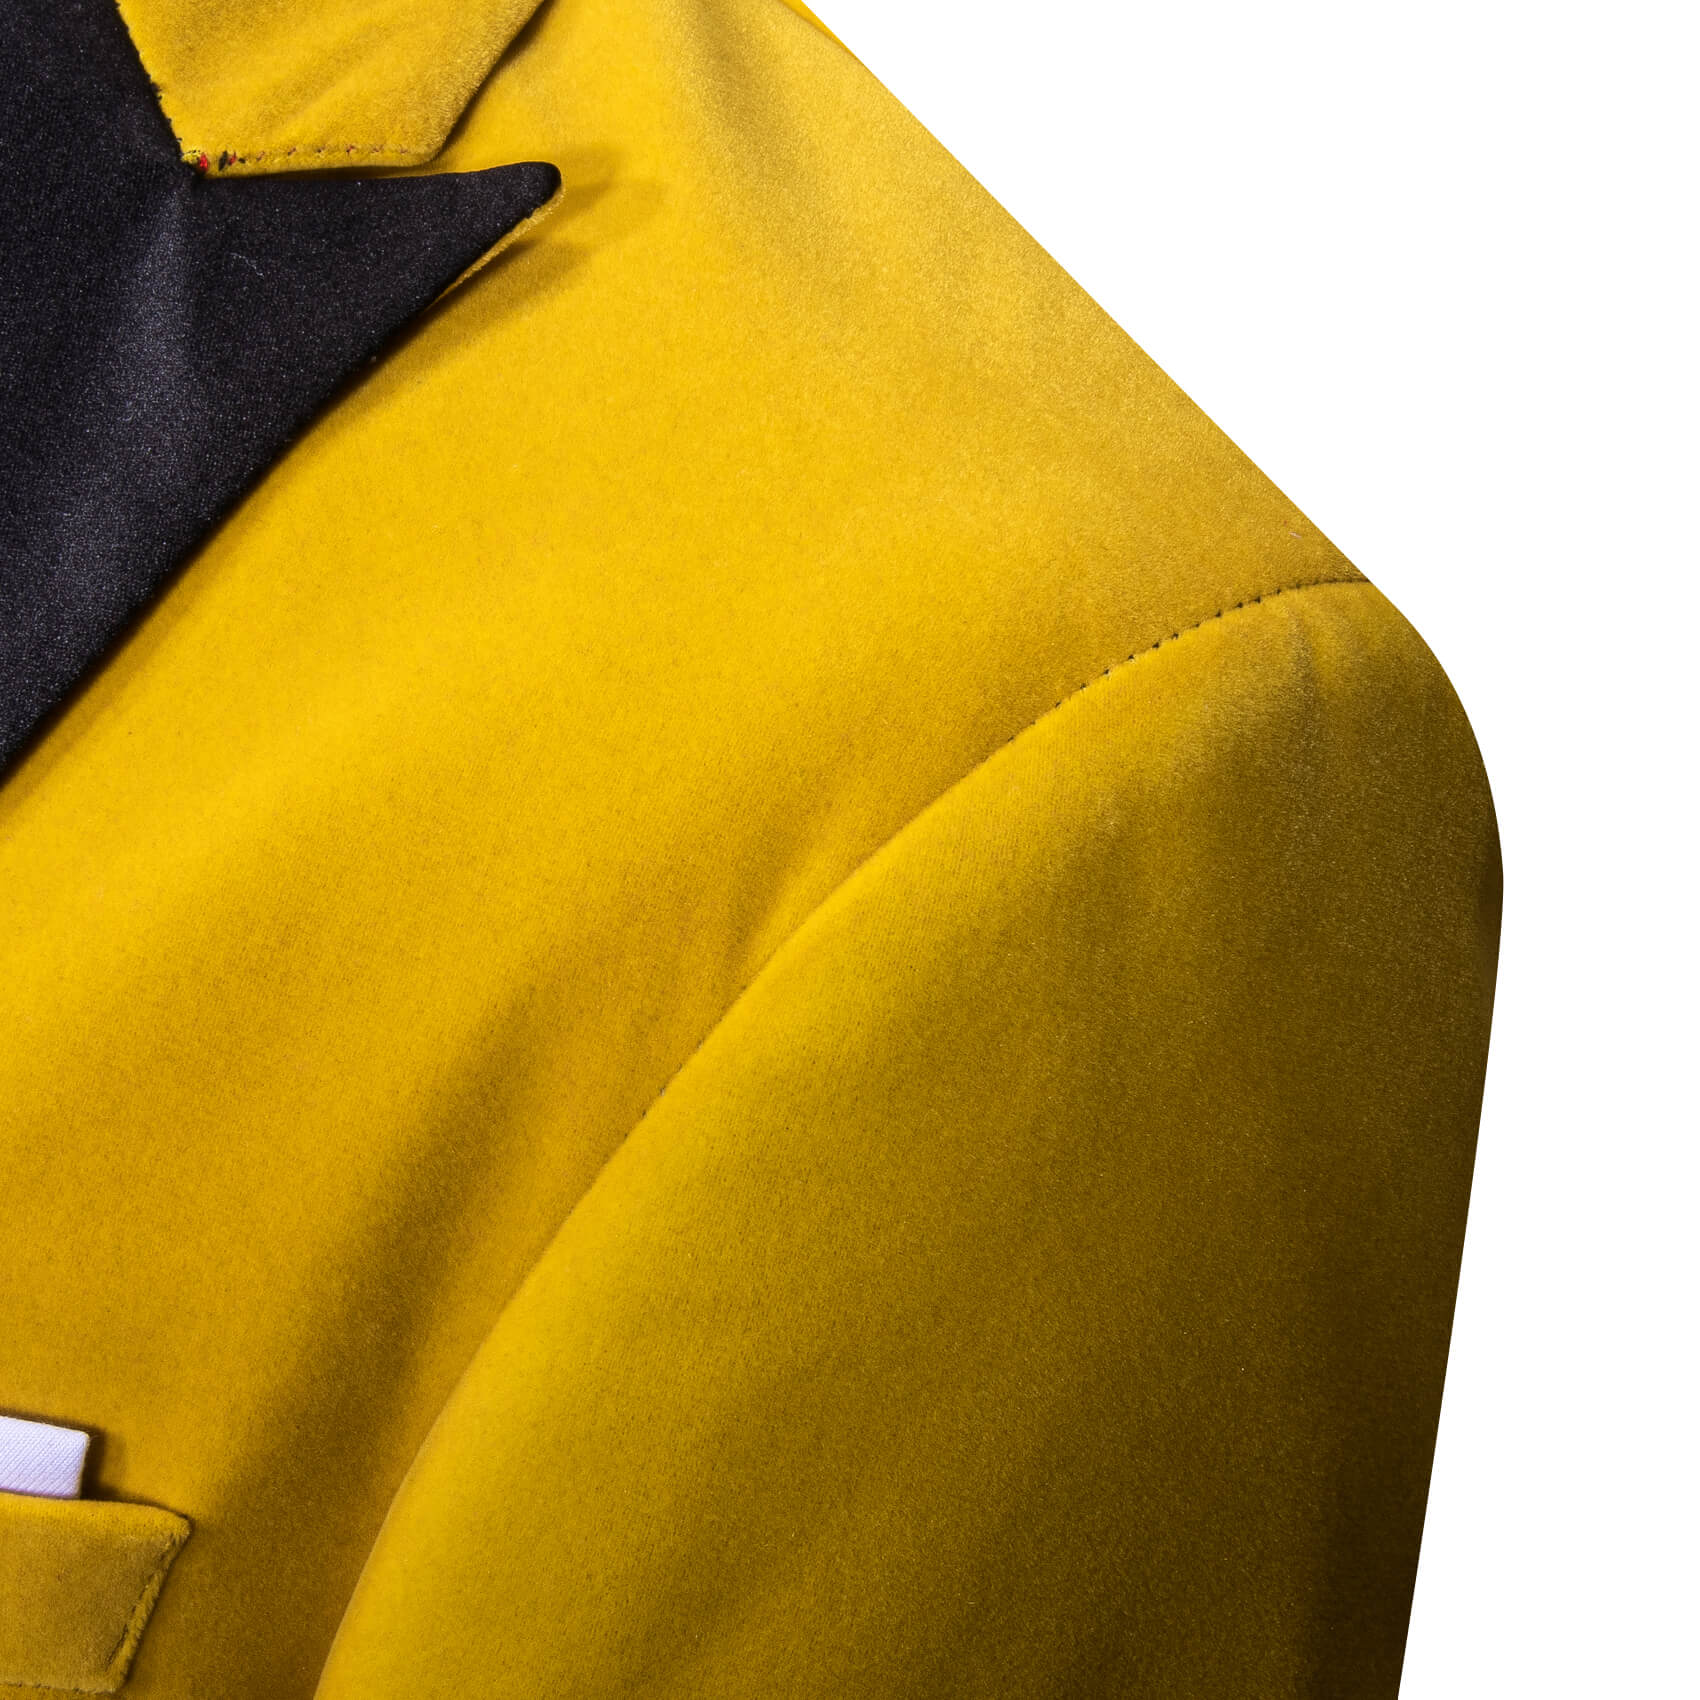 Barry.wang Men's Suit Goldenrod Yellow Solid Silk Peak Collar Suit